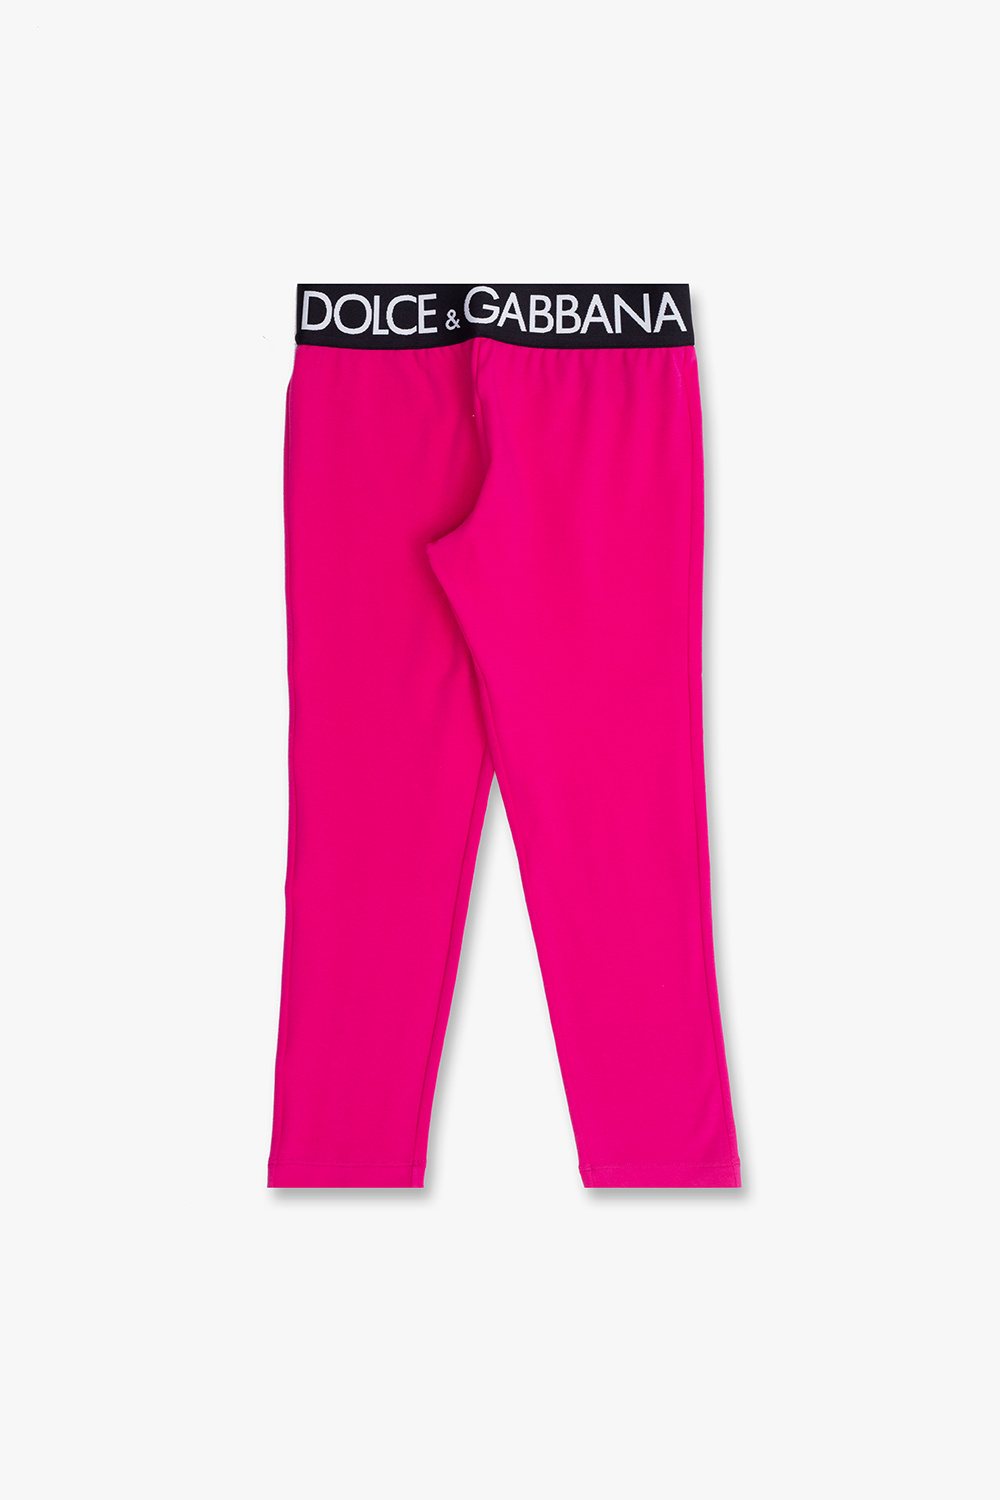 dolce Schwarz & Gabbana Kids dolce Schwarz gabbana chantilly lace midi skirt item